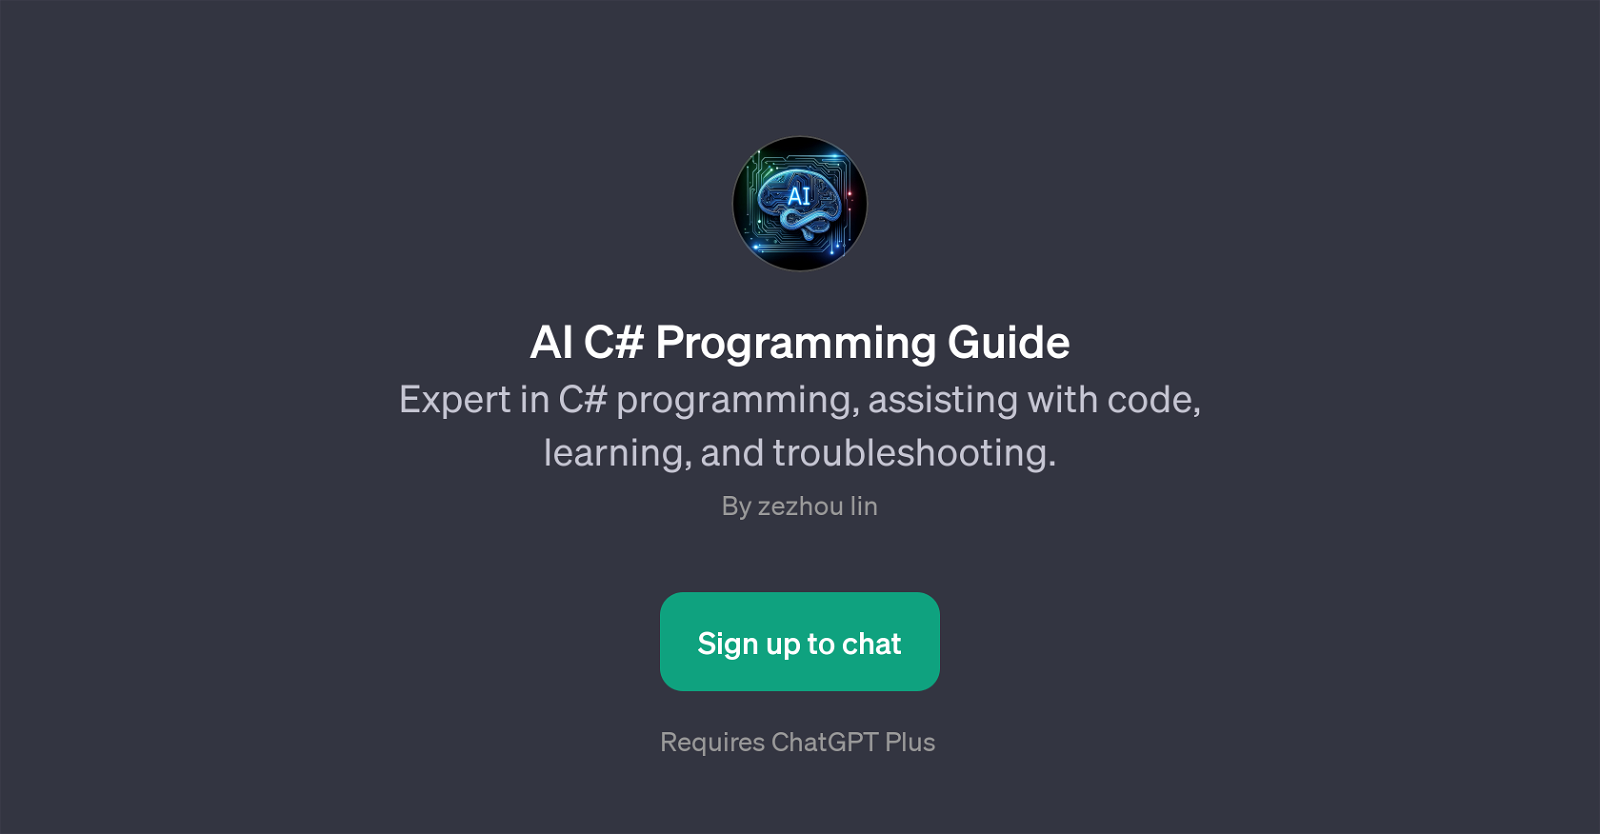 AI C# Programming Guide website